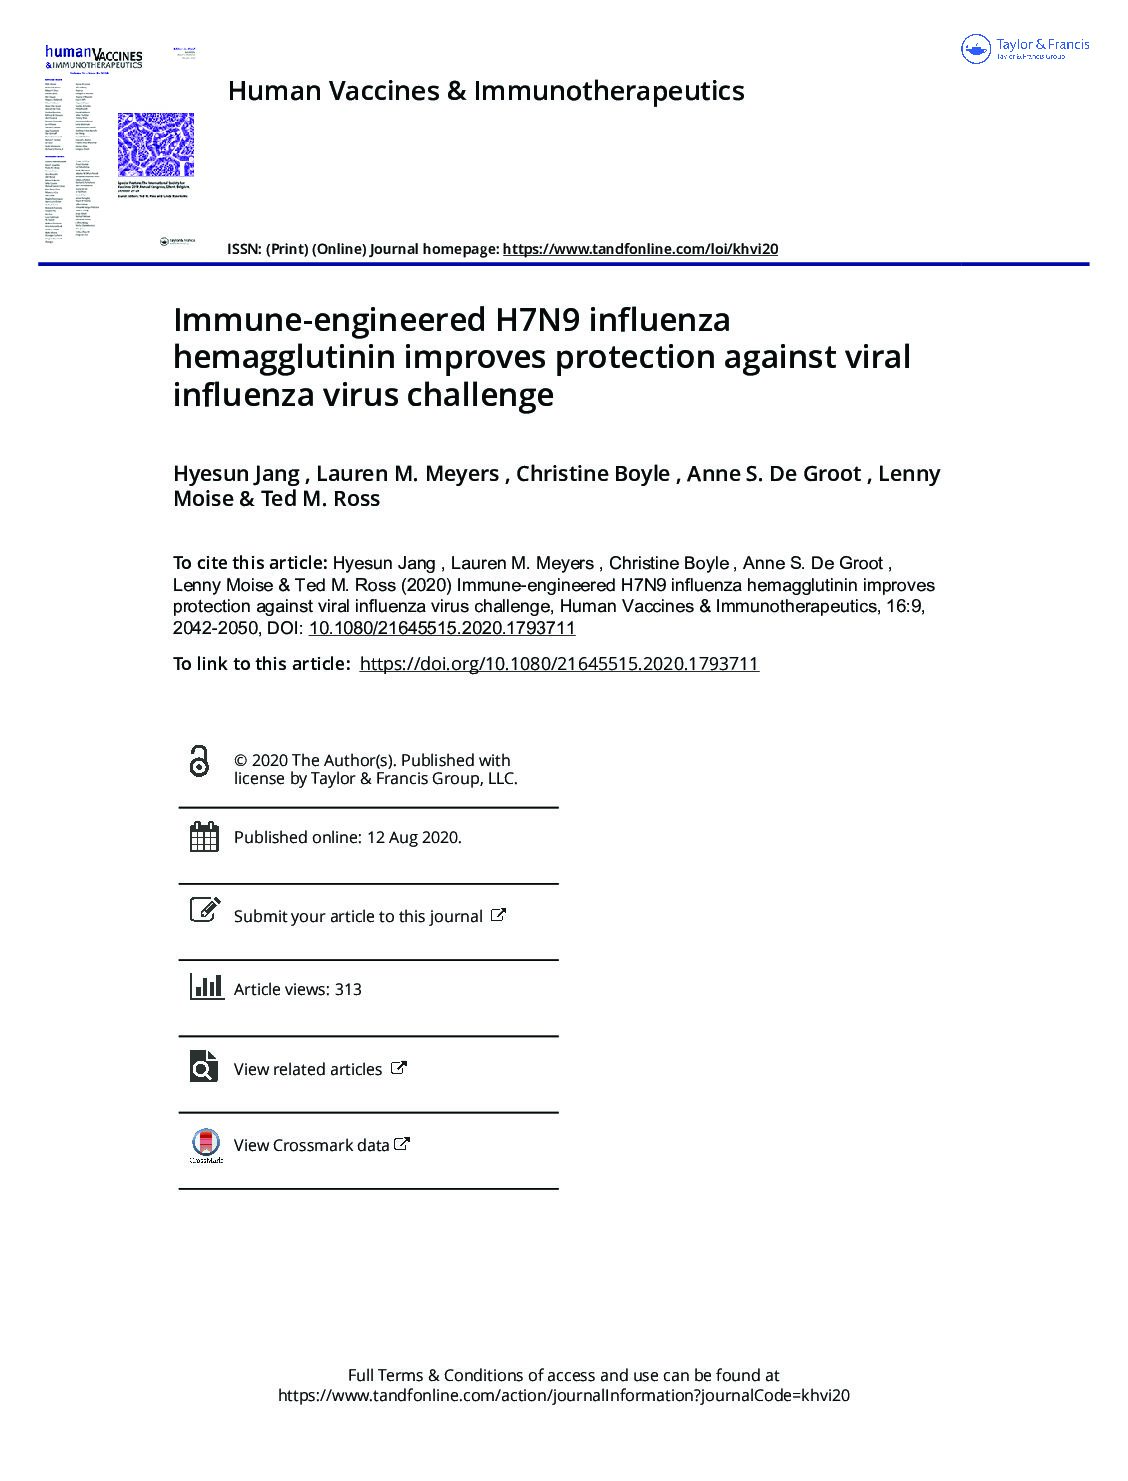 Immune-engineered H7N9 influenza hemagglutinin improves protection against viral influenza virus challenge